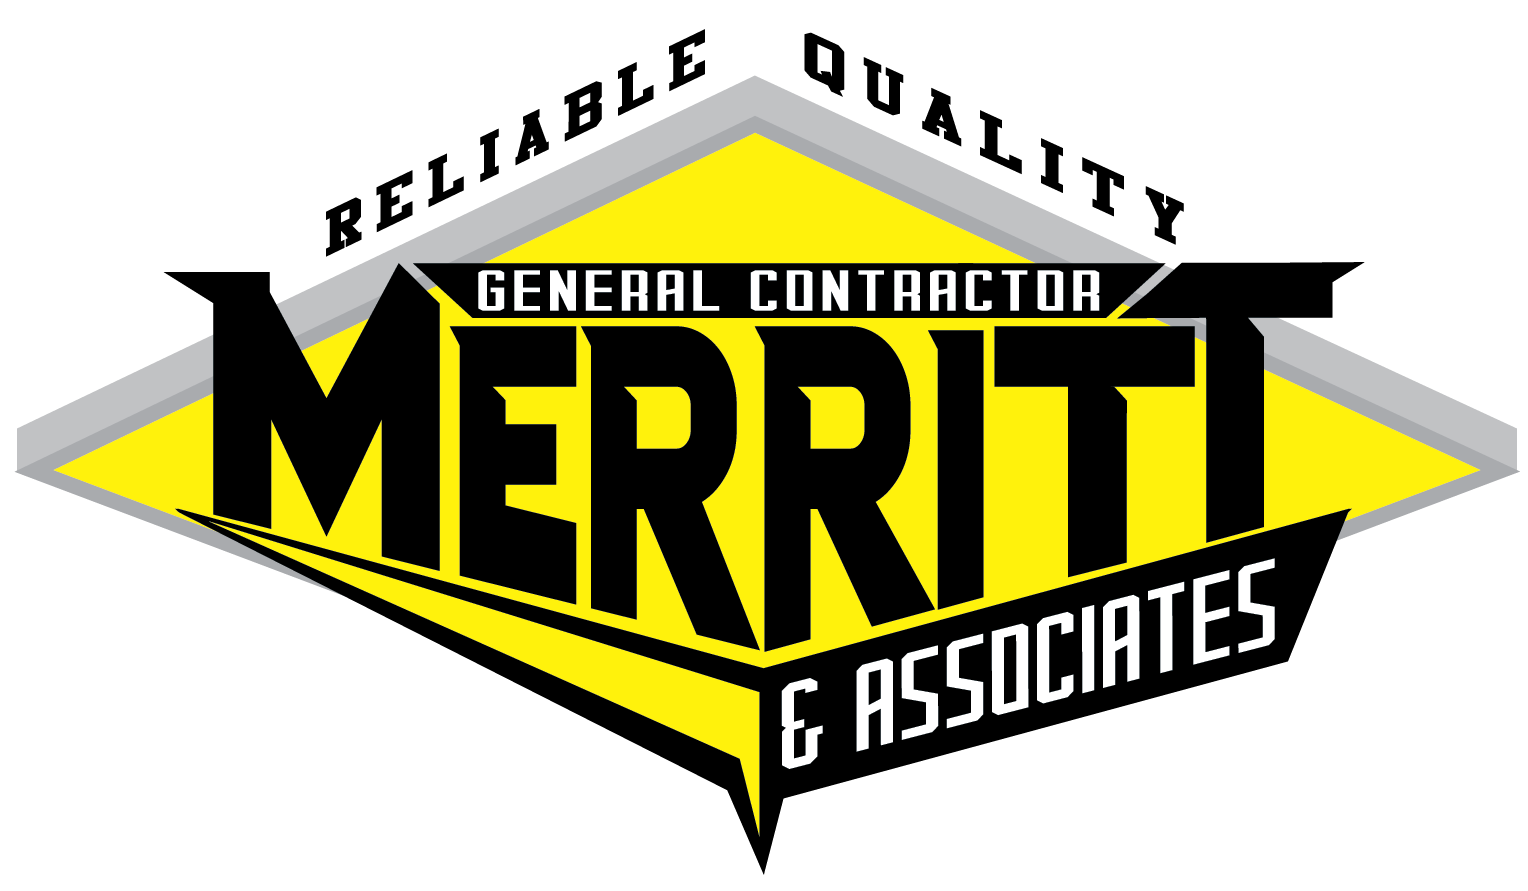 Merritt & Associates G.C., Inc.